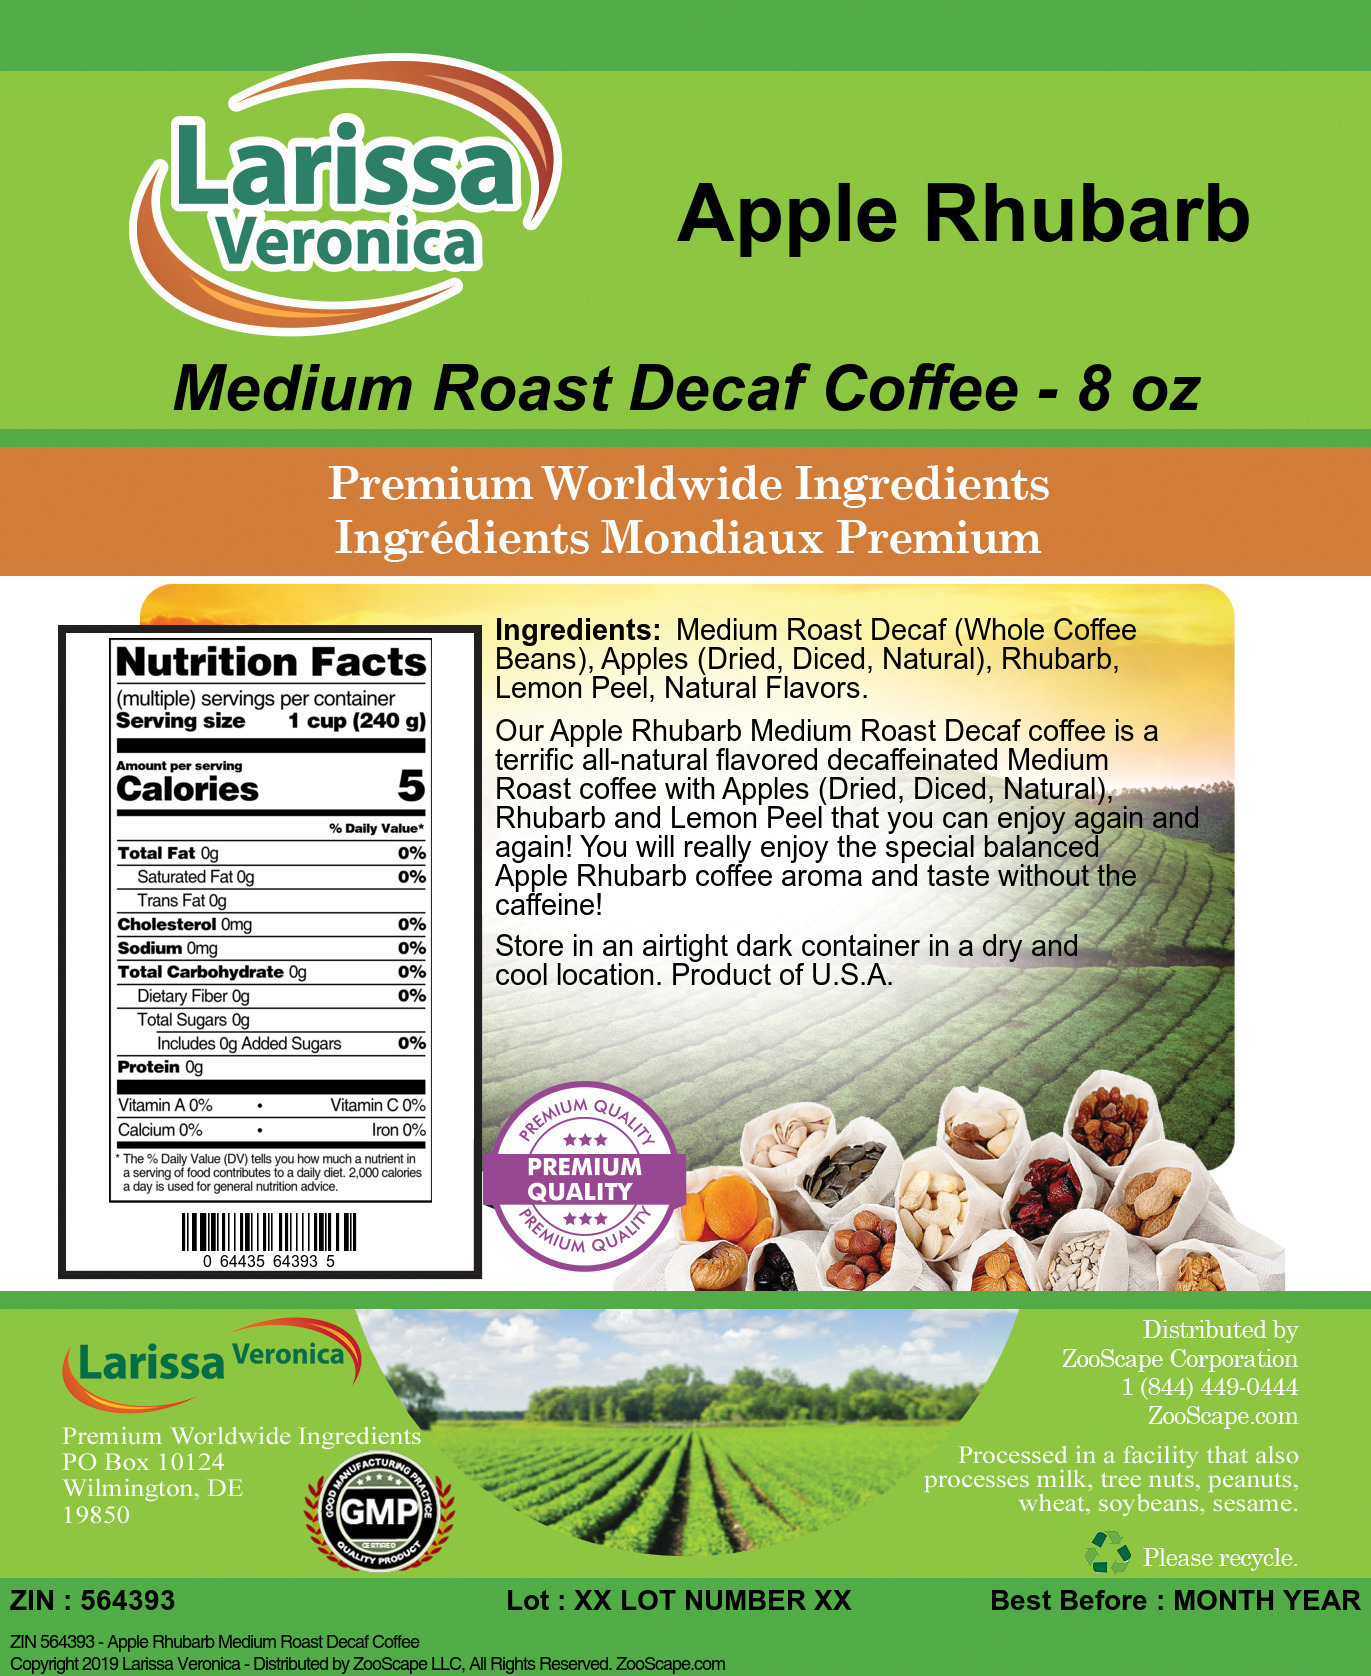 Apple Rhubarb Medium Roast Decaf Coffee - Label